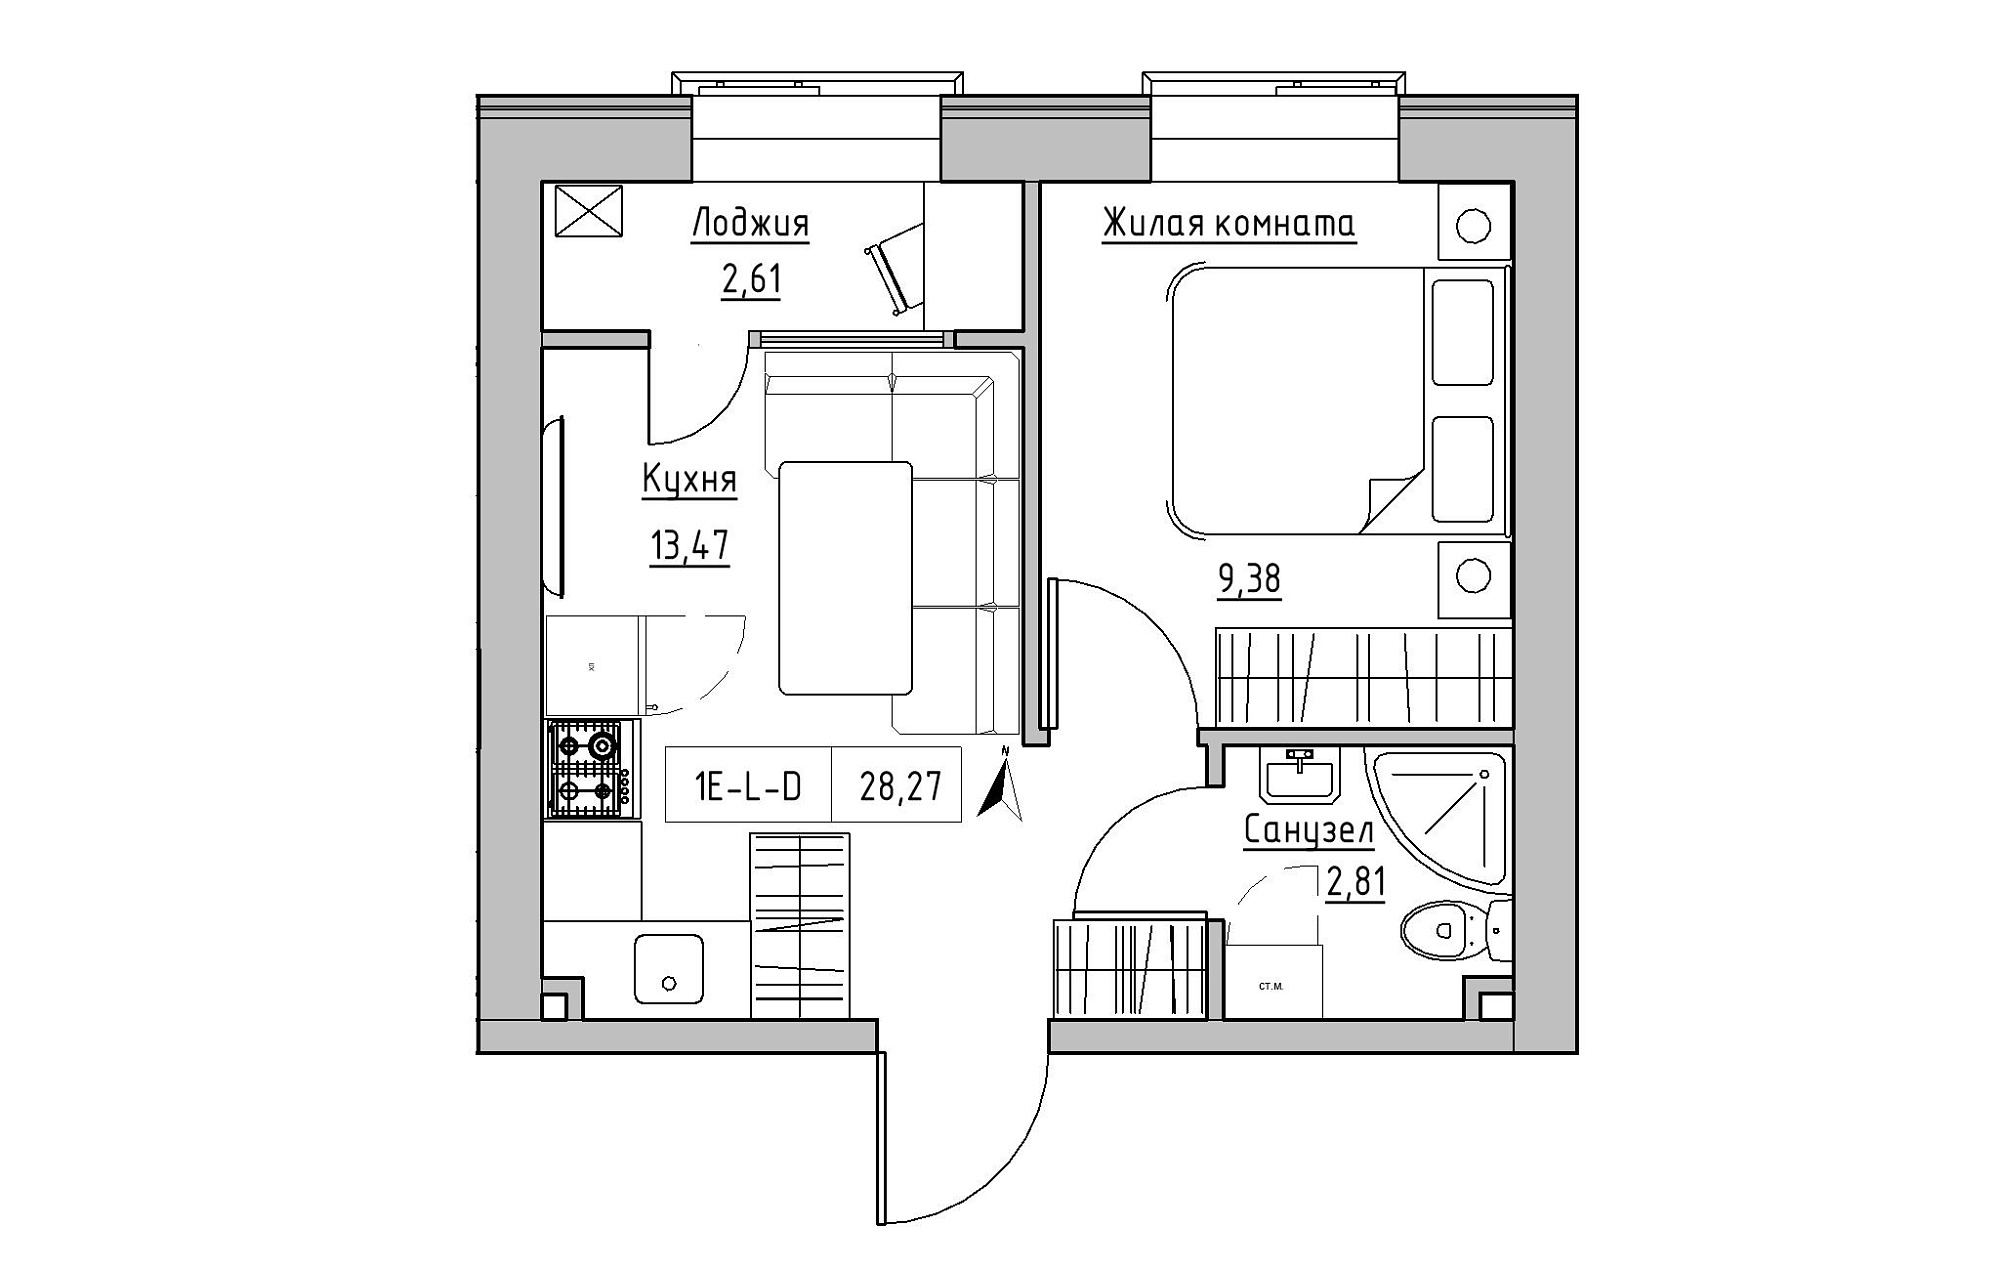 Planning 1-rm flats area 28.27m2, KS-019-04/0015.